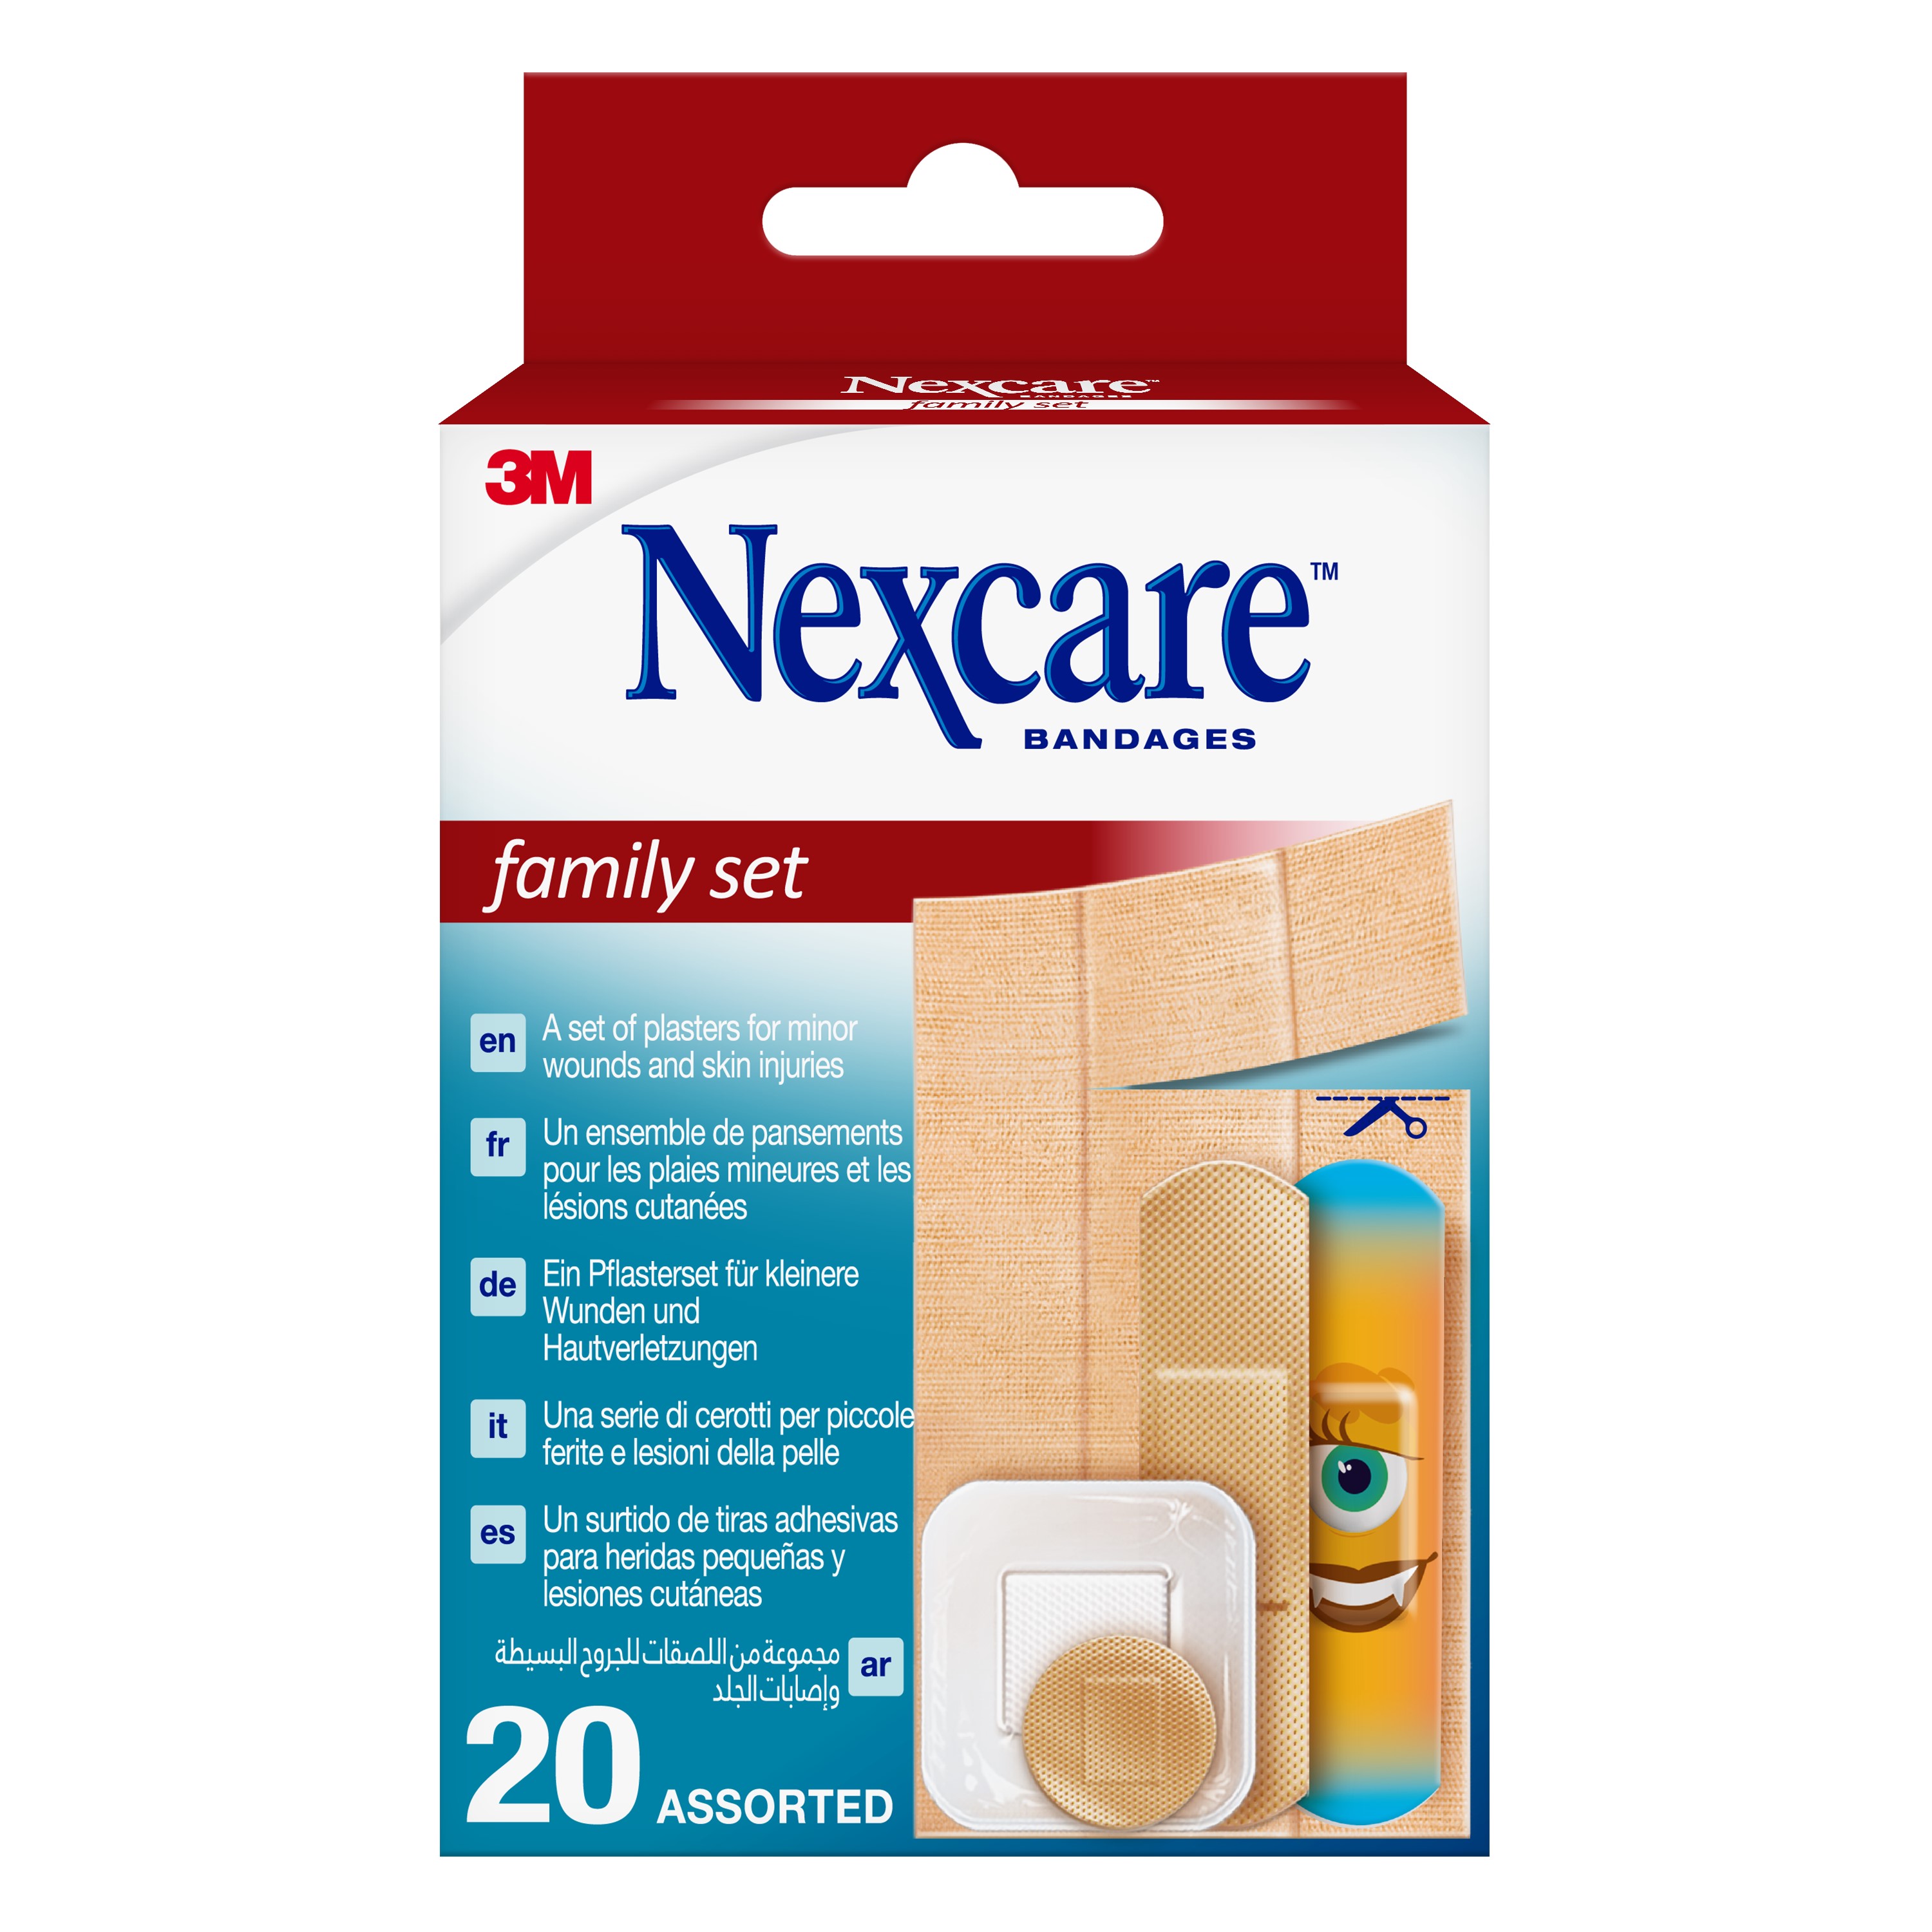 Nexcare™ Family Set, gemischt 20 Pflaster